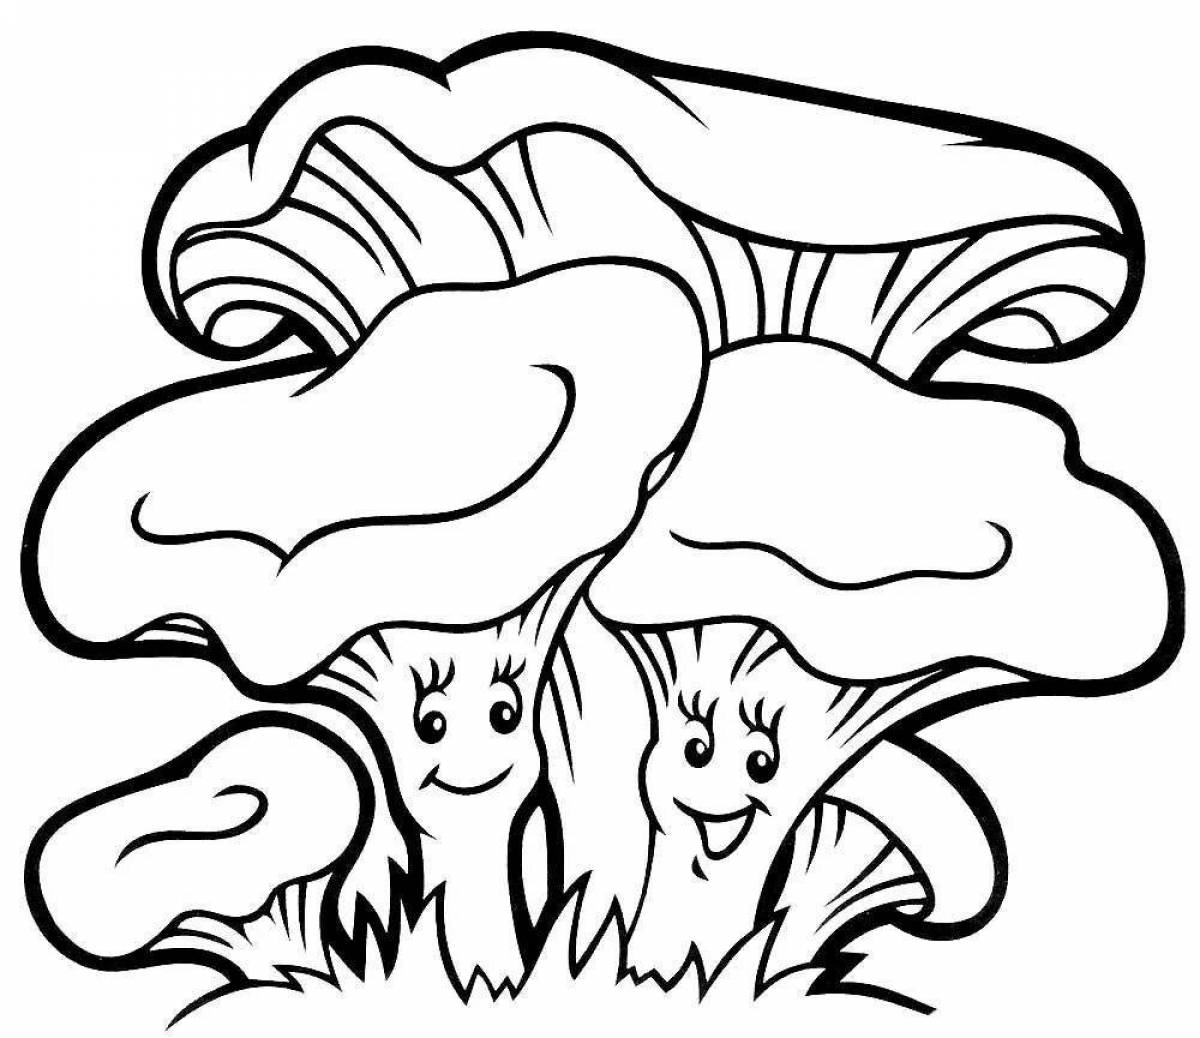 Coloring book deluxe chanterelle mushroom